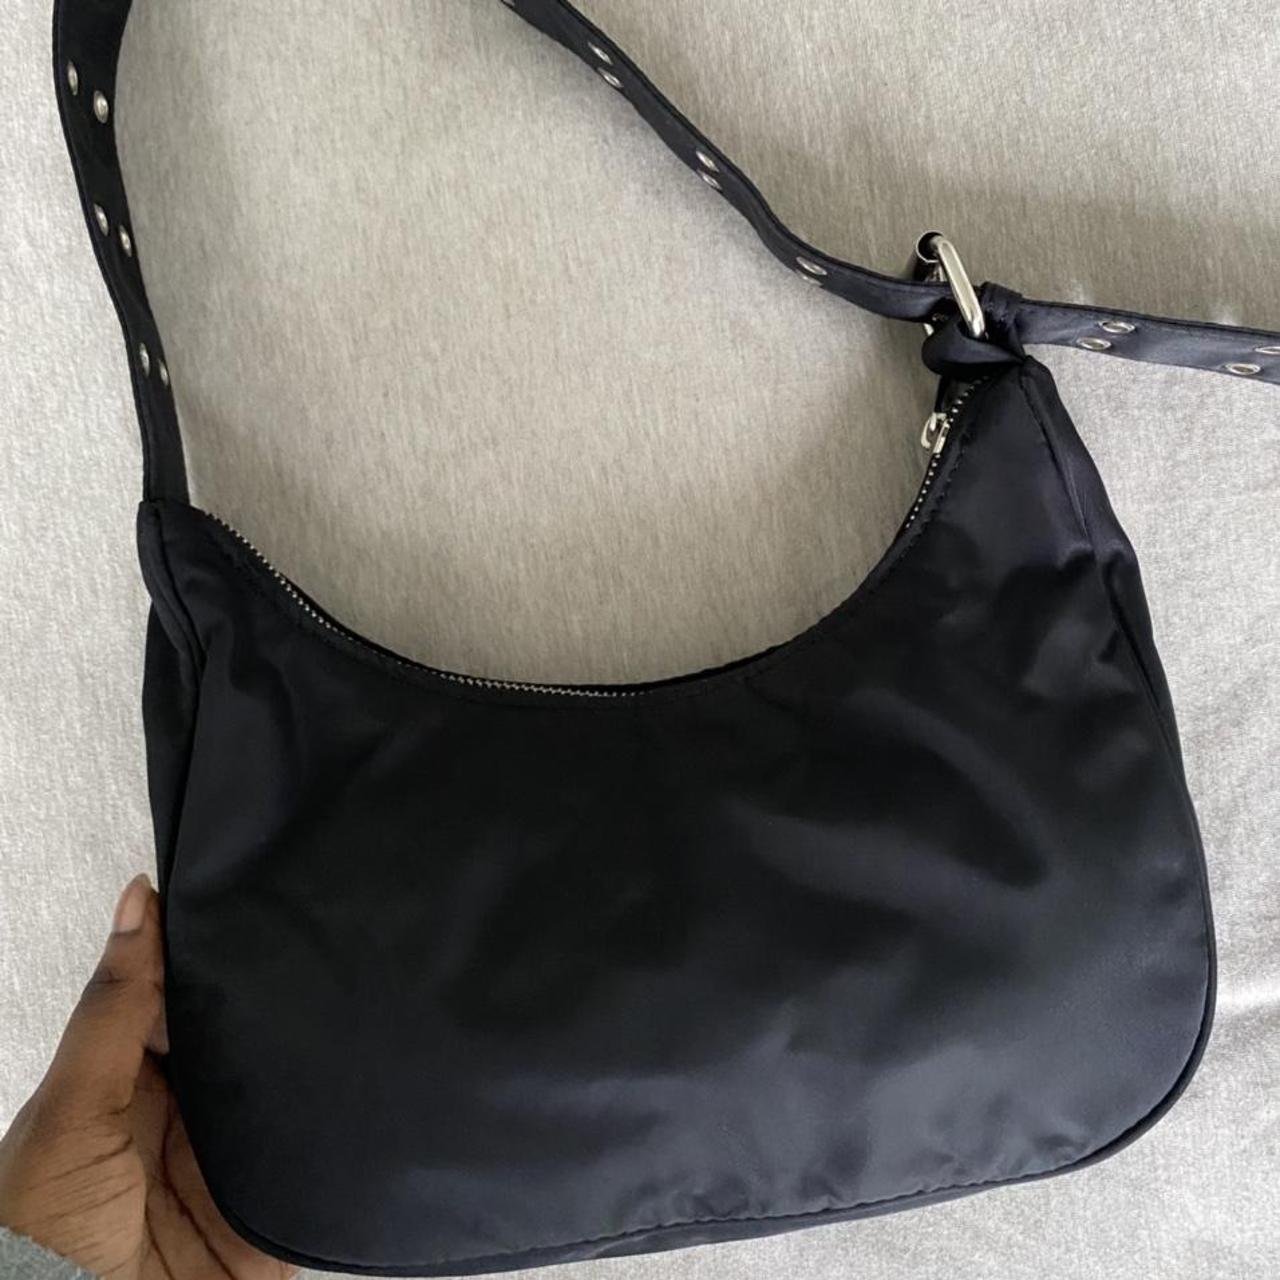 Mini purse - Depop